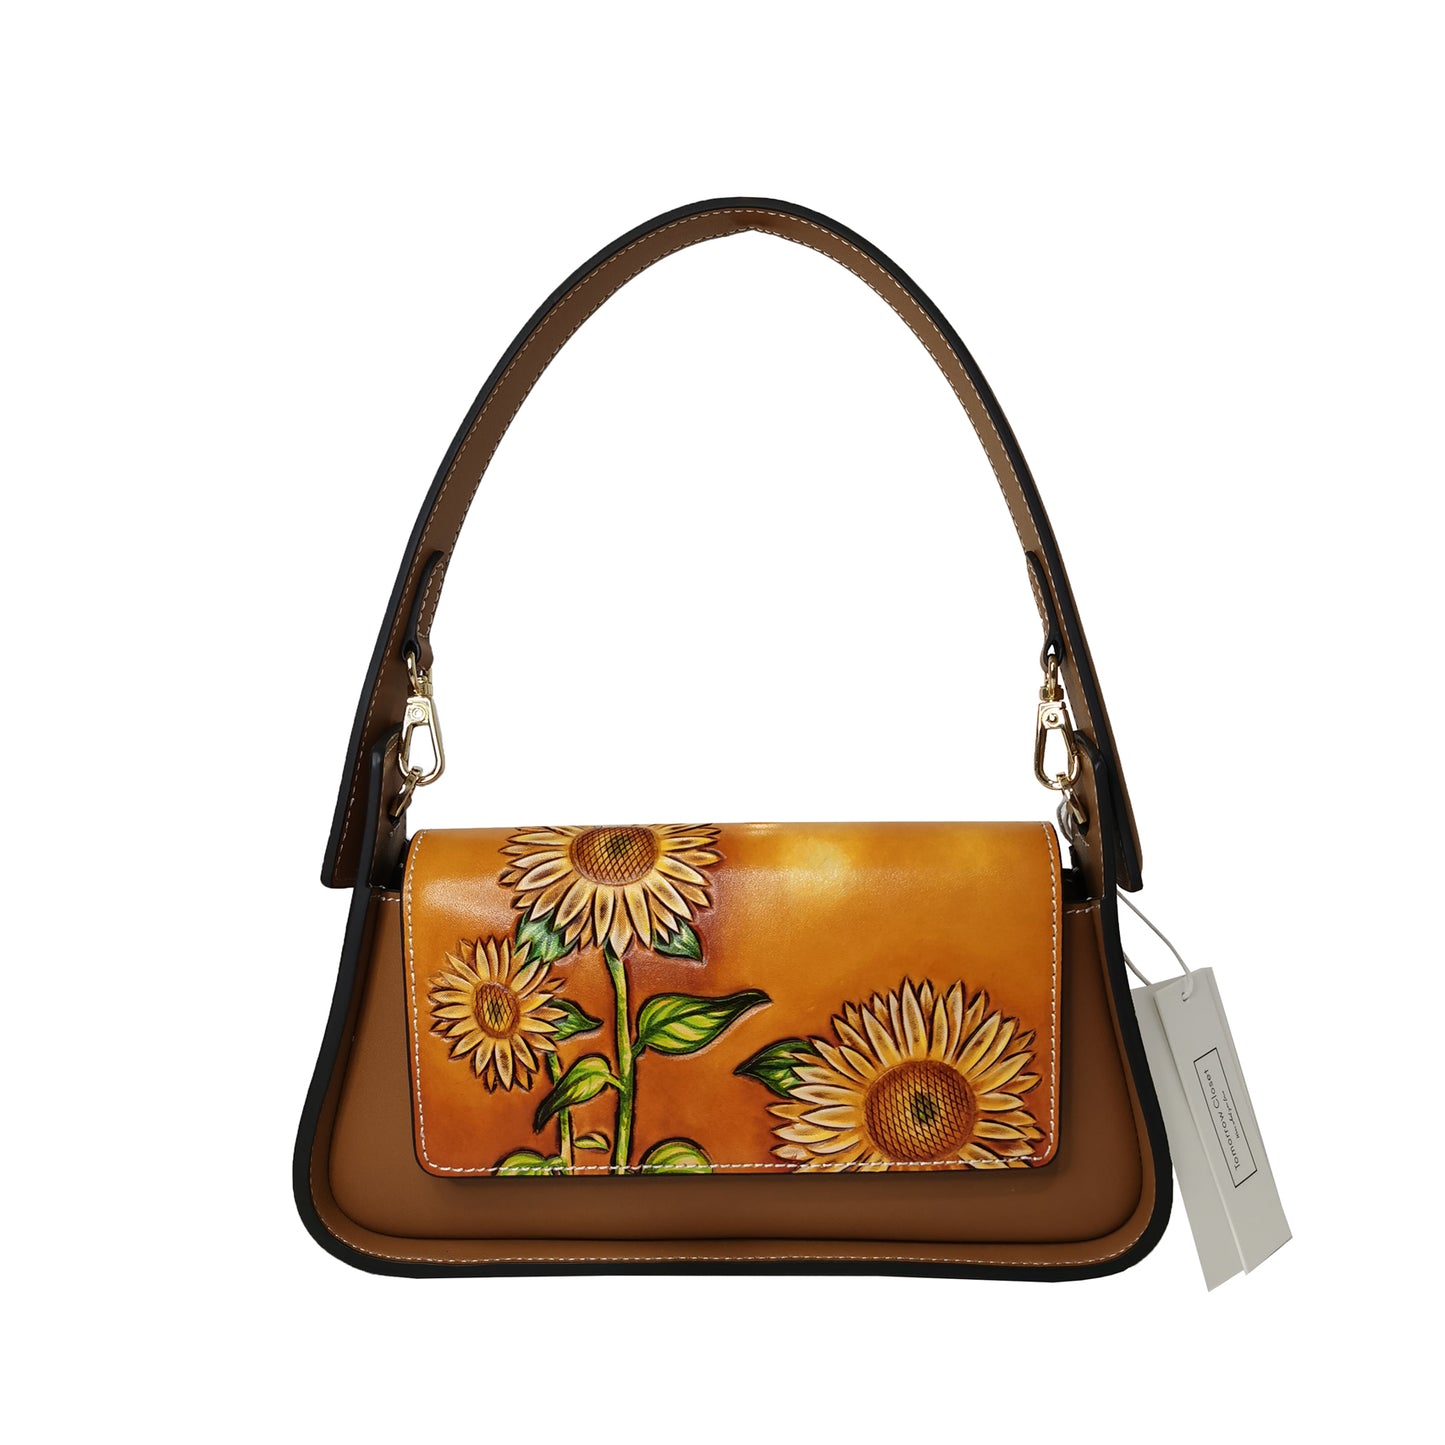 Women's genuine engraved cowhide leather handbag Ingot V2 design with 2 straps